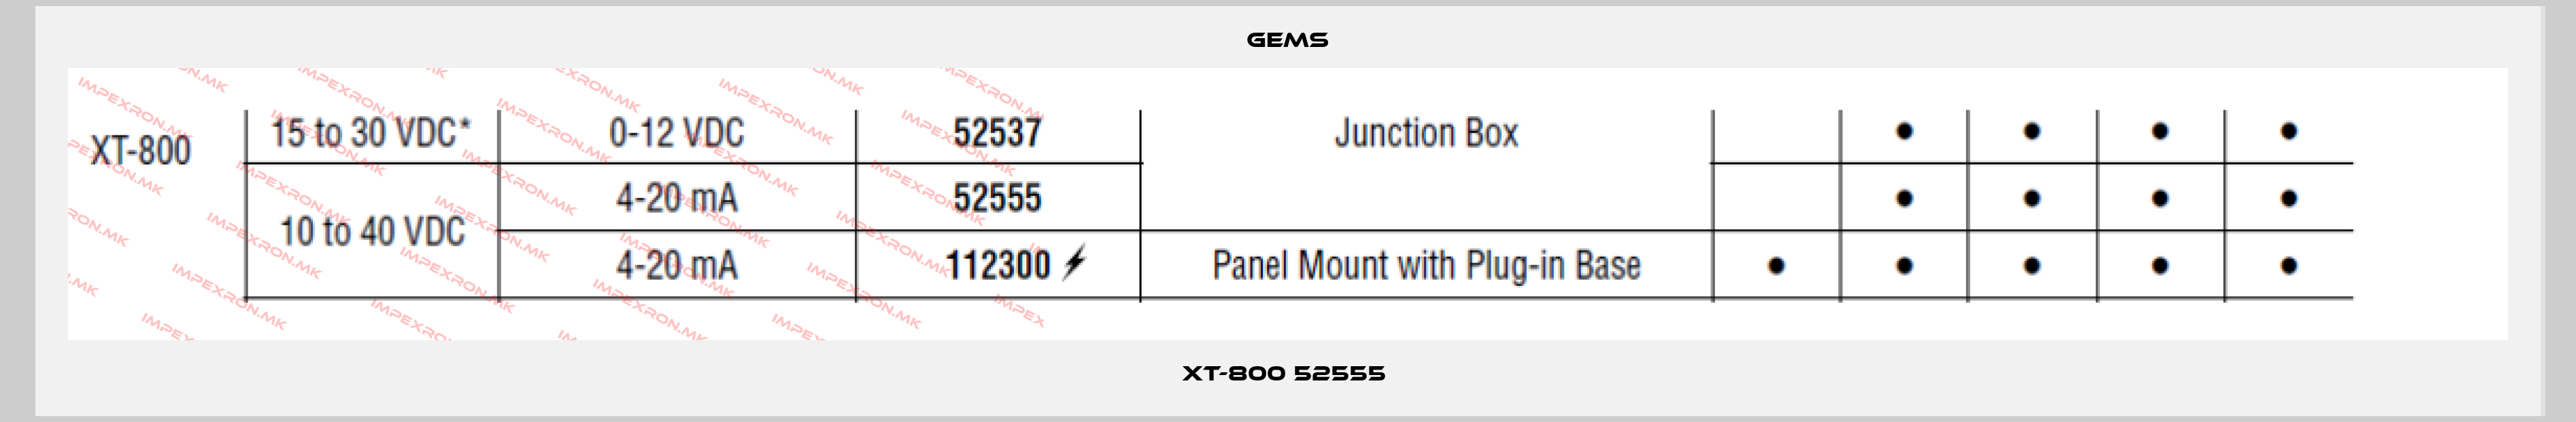 Gems-XT-800 52555 price